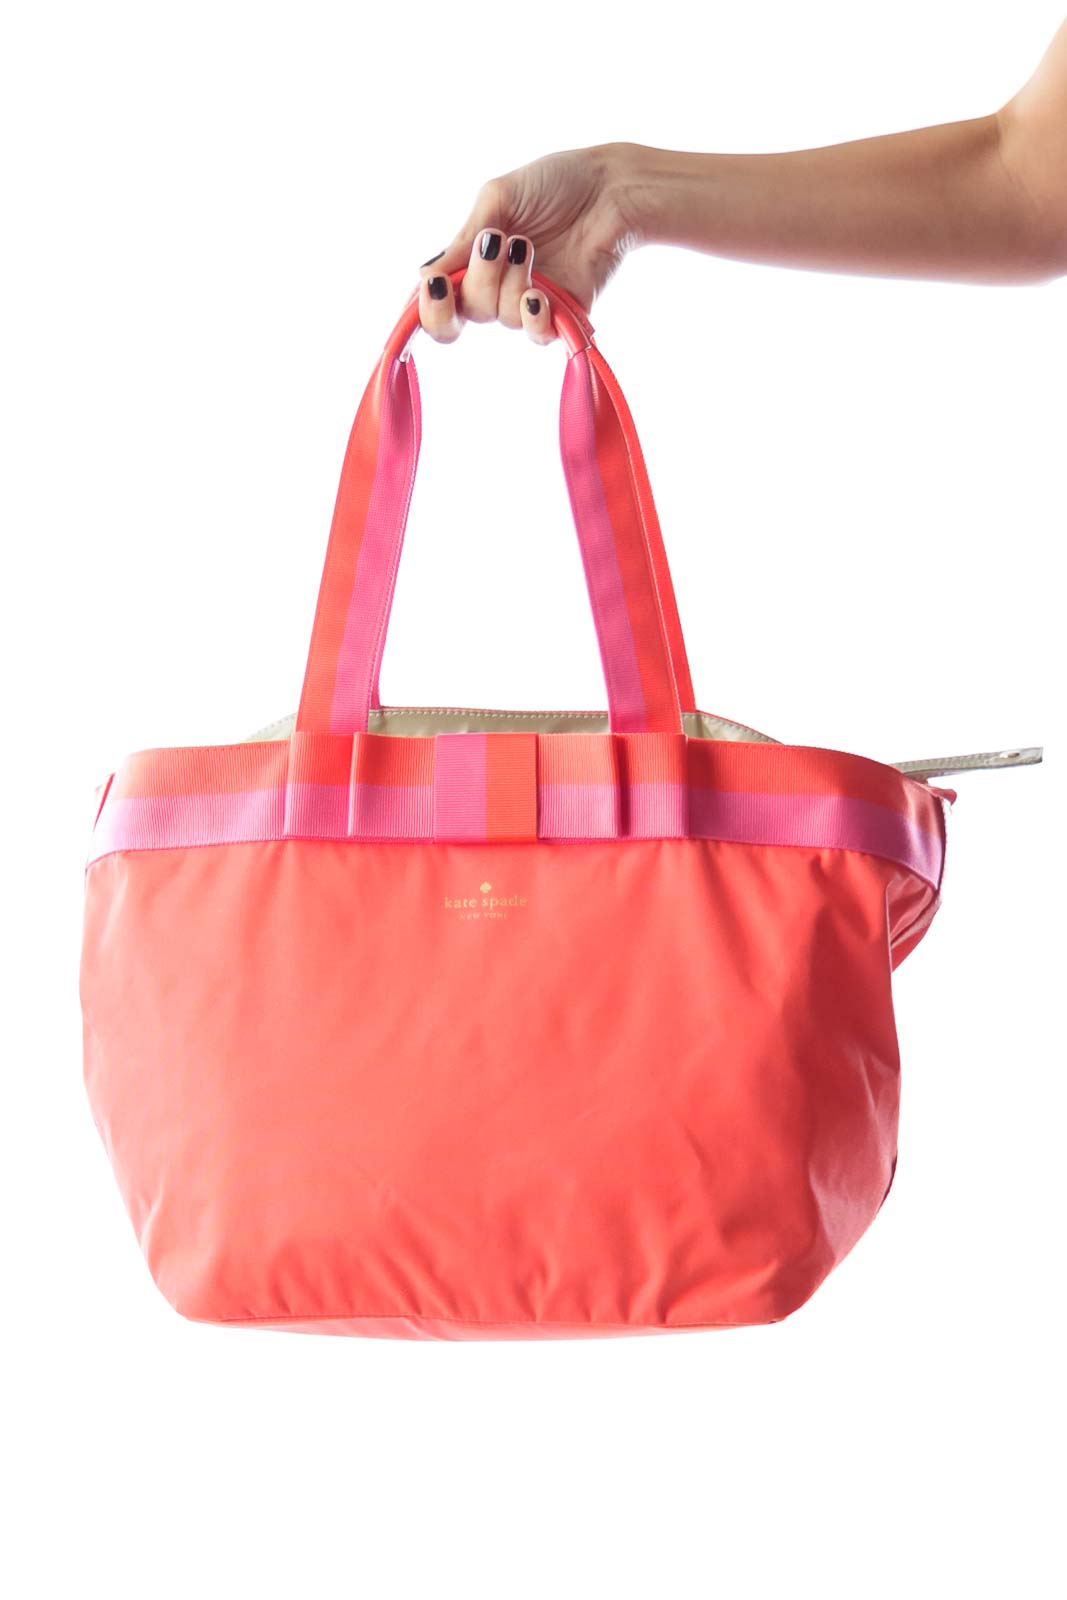 Orange & Pink Diaper Bag Front